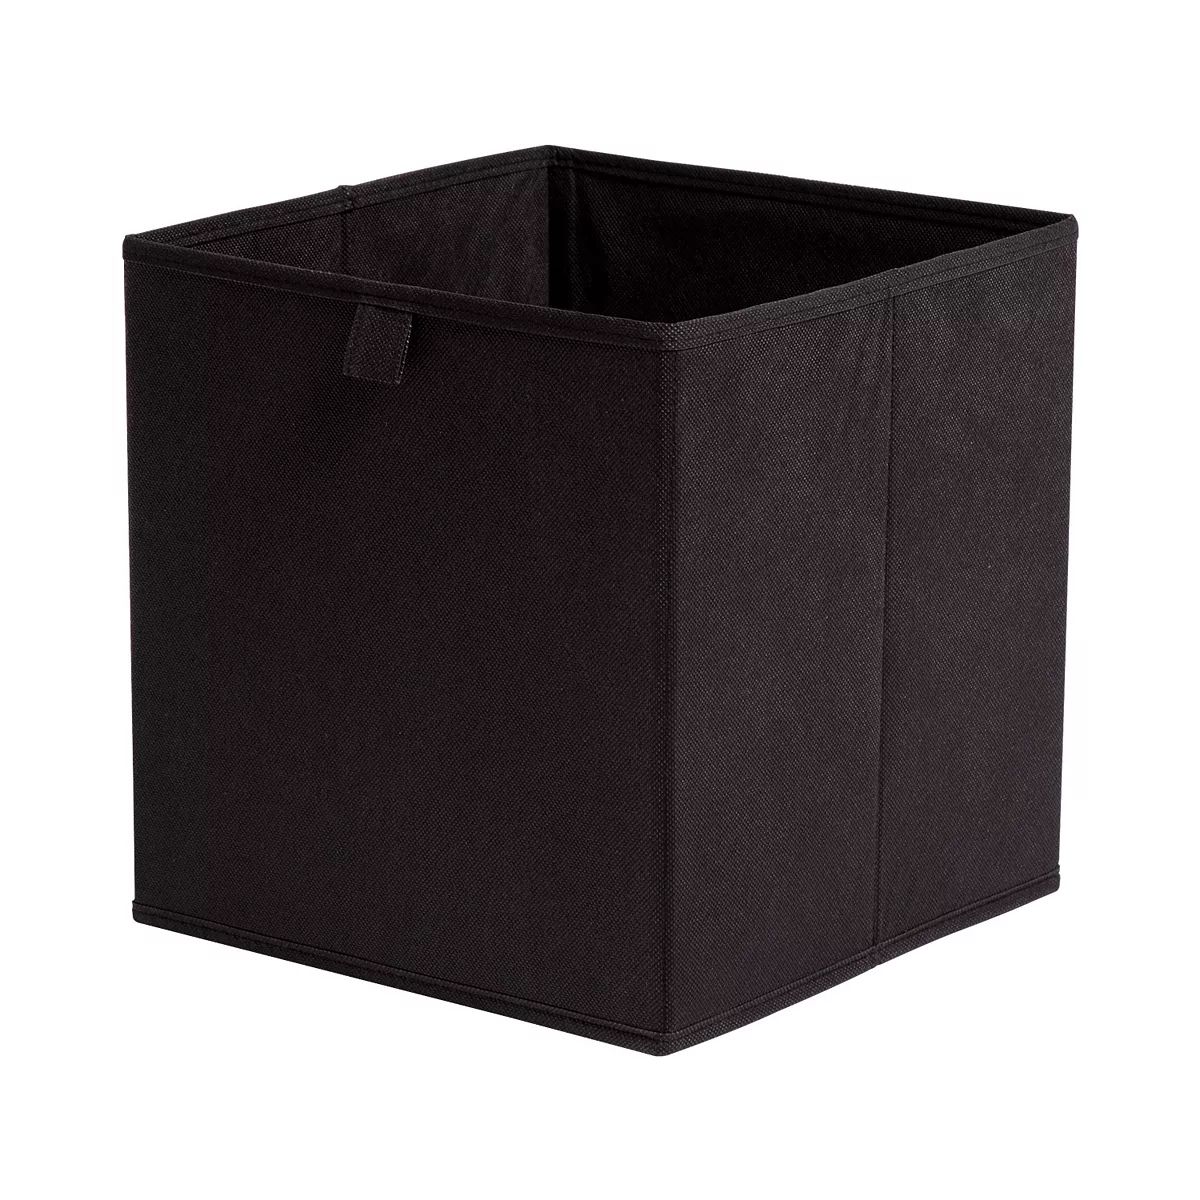 The Big One® Storage Cube | Kohl's